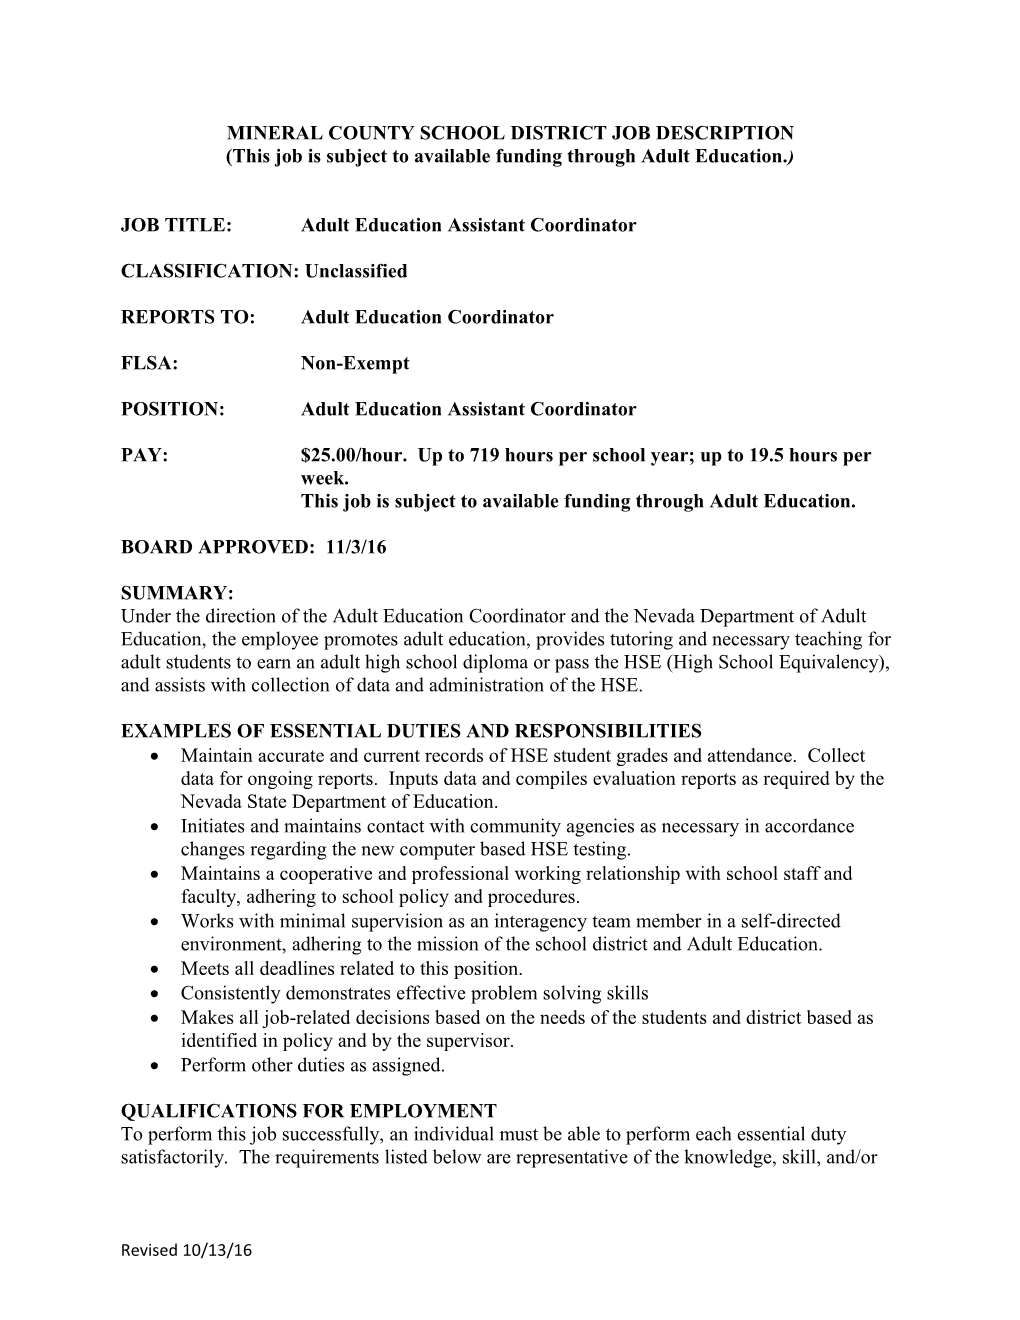 Mineral County School District Job Description